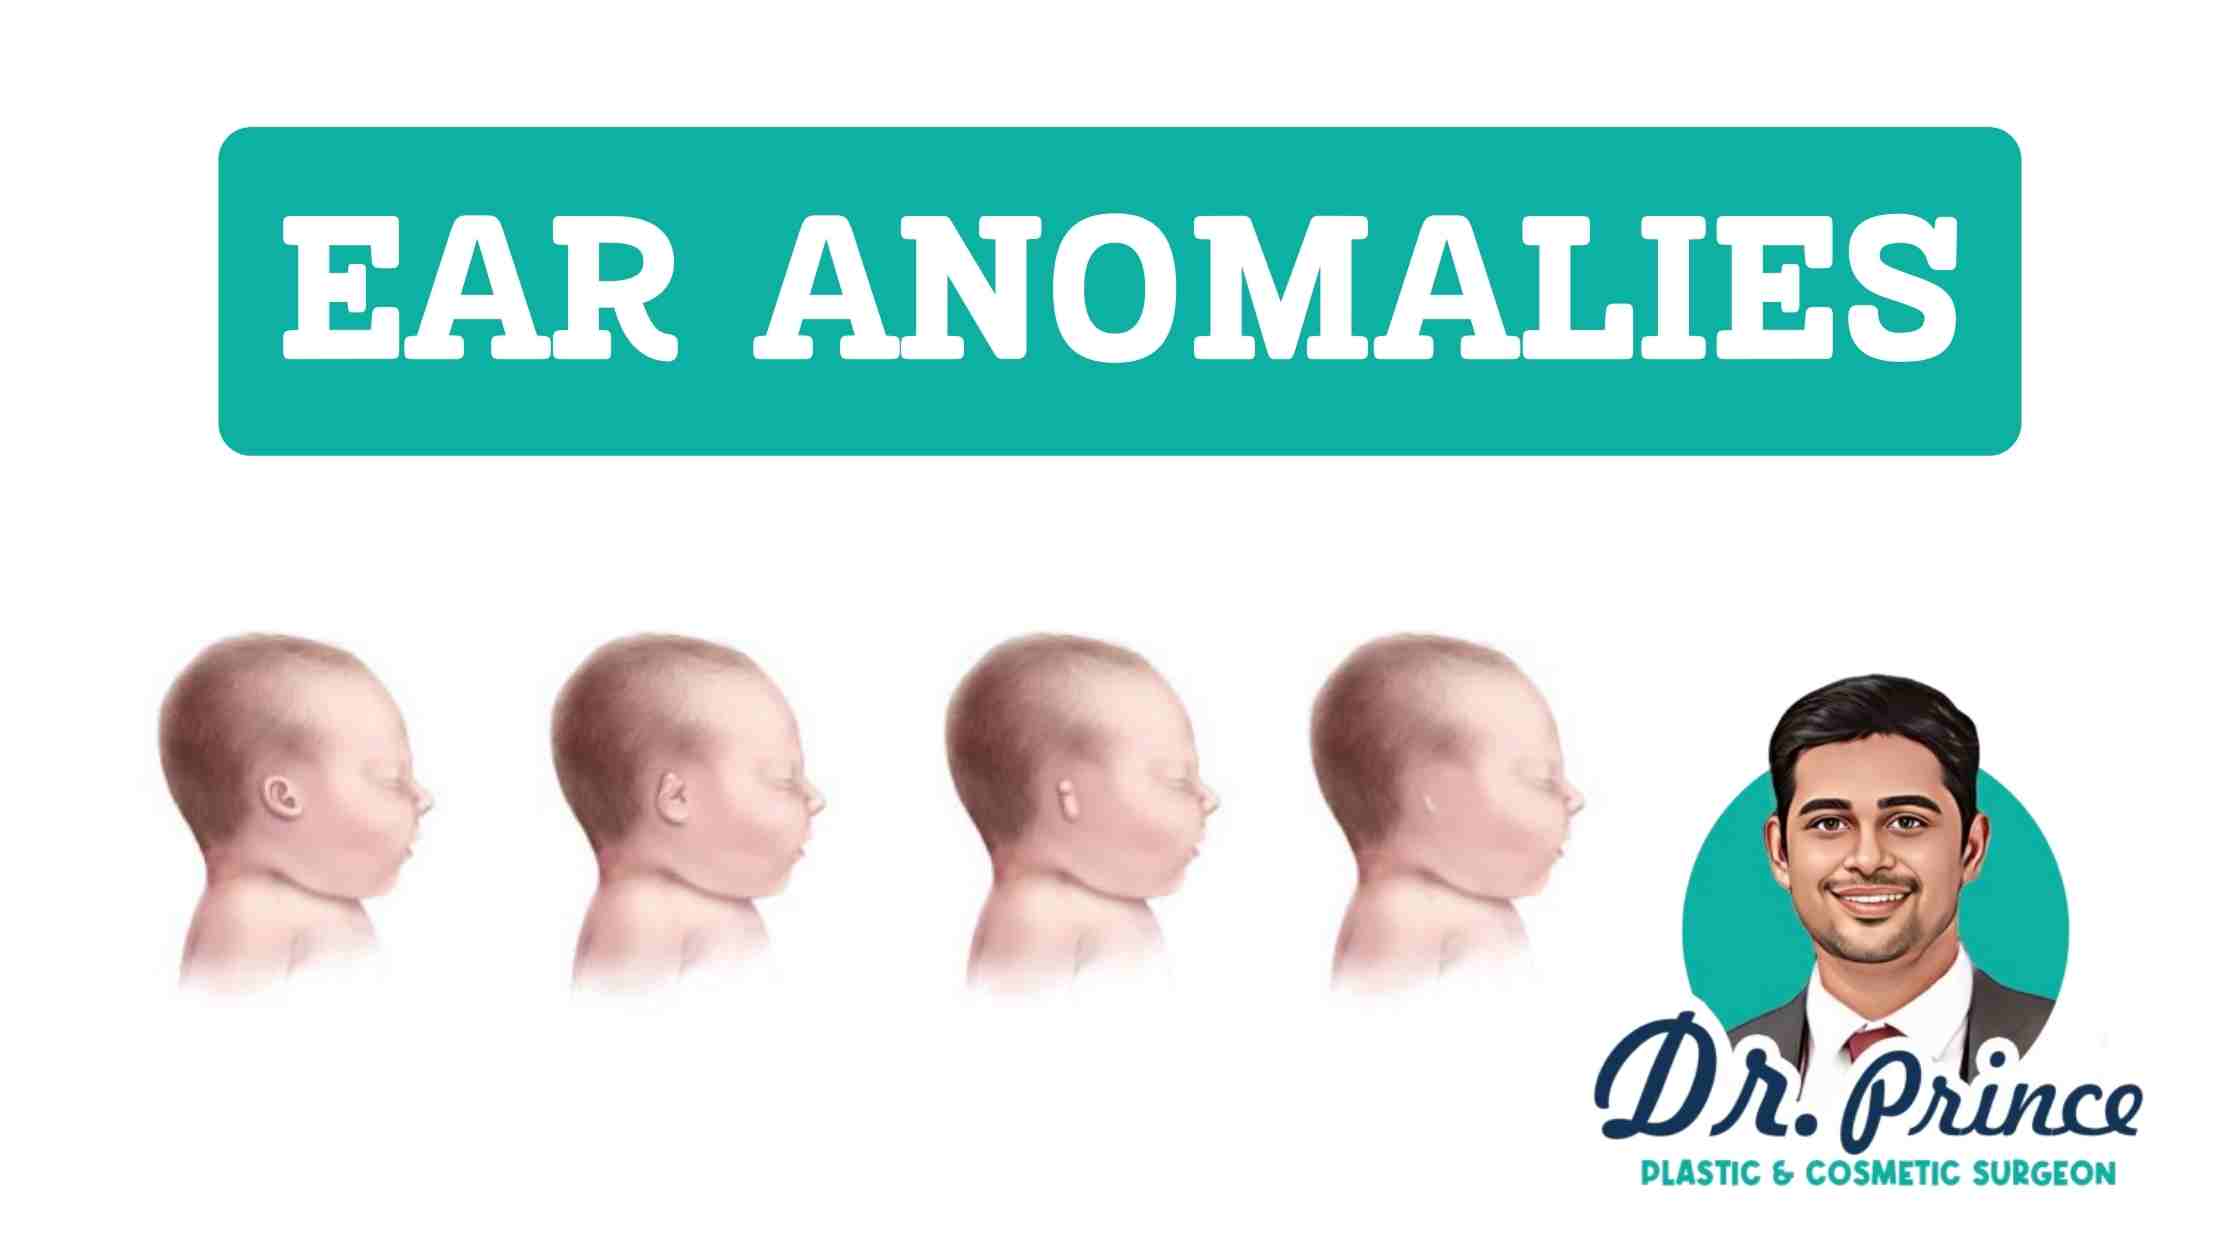 Congenital Ear Deformities: Illustration showing various ear anomalies and deformities.